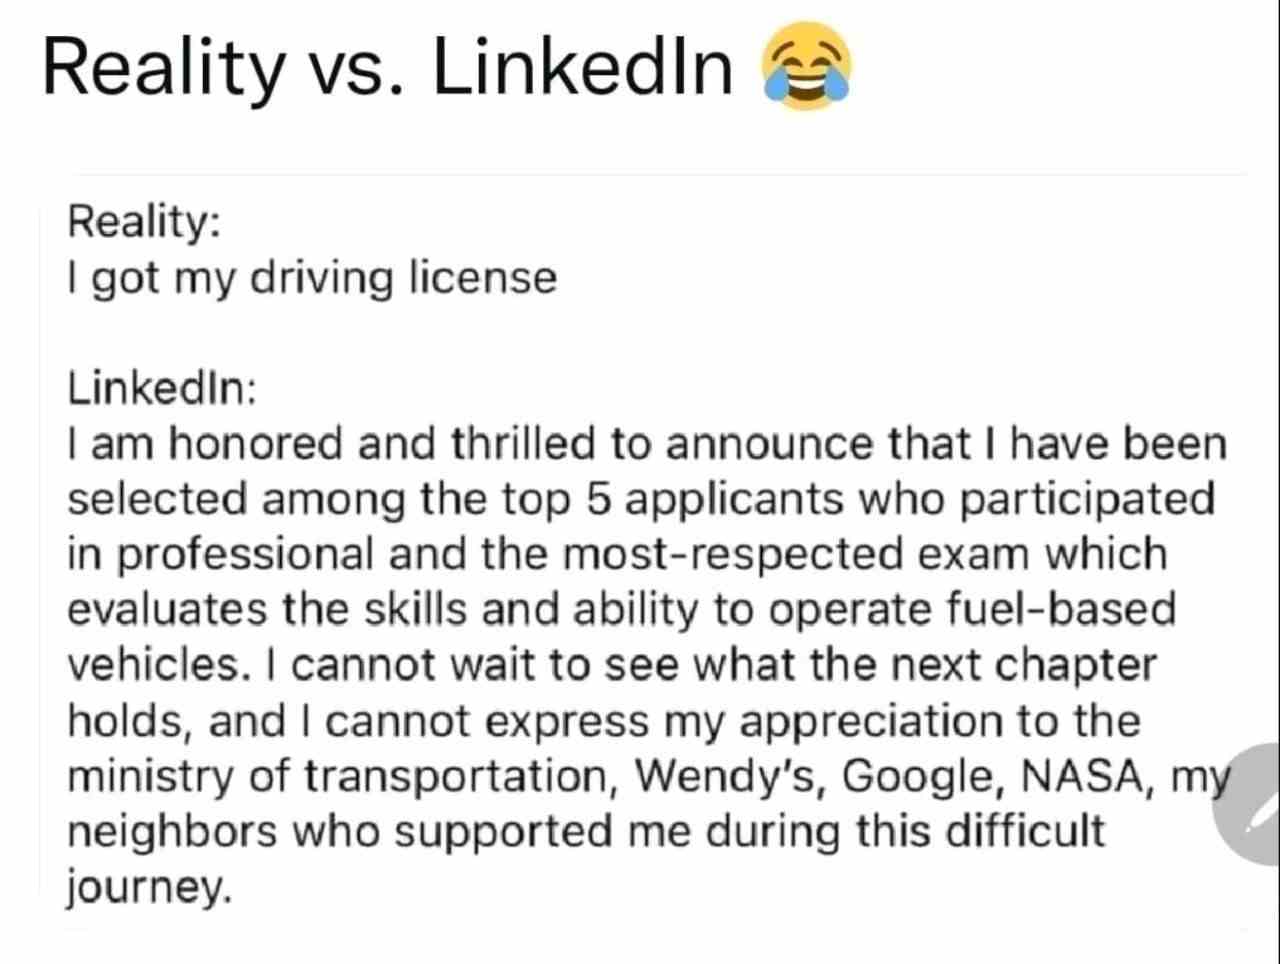 Reality vs. LinkedIn